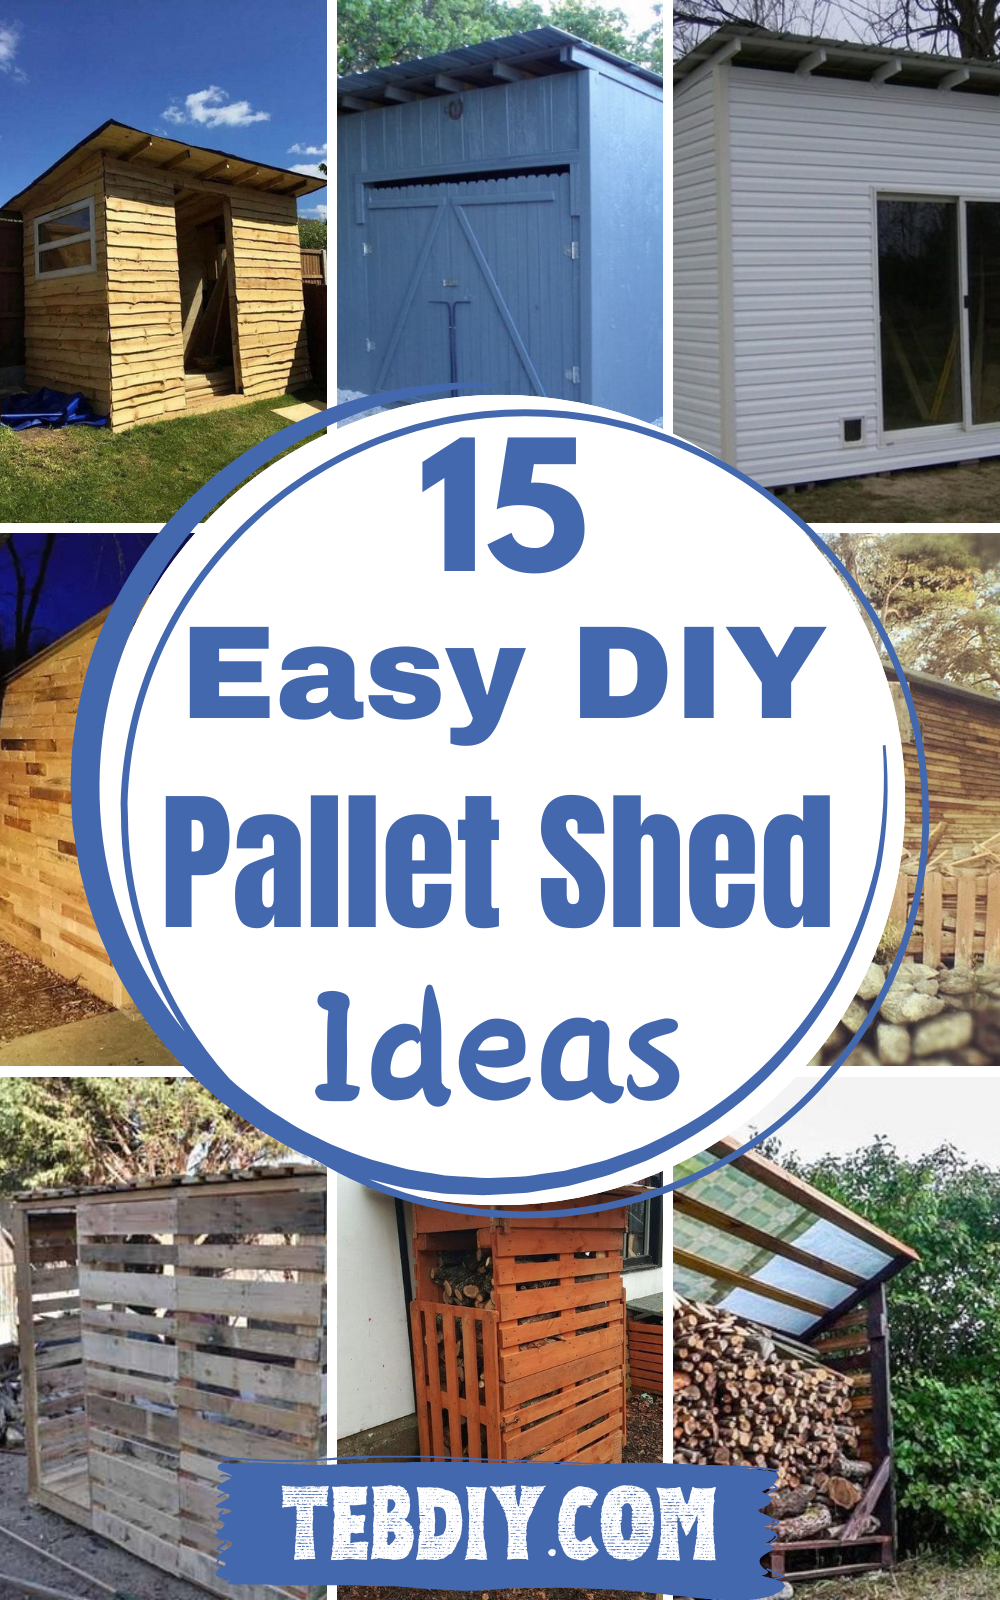 DIY Pallet Shed Ideas